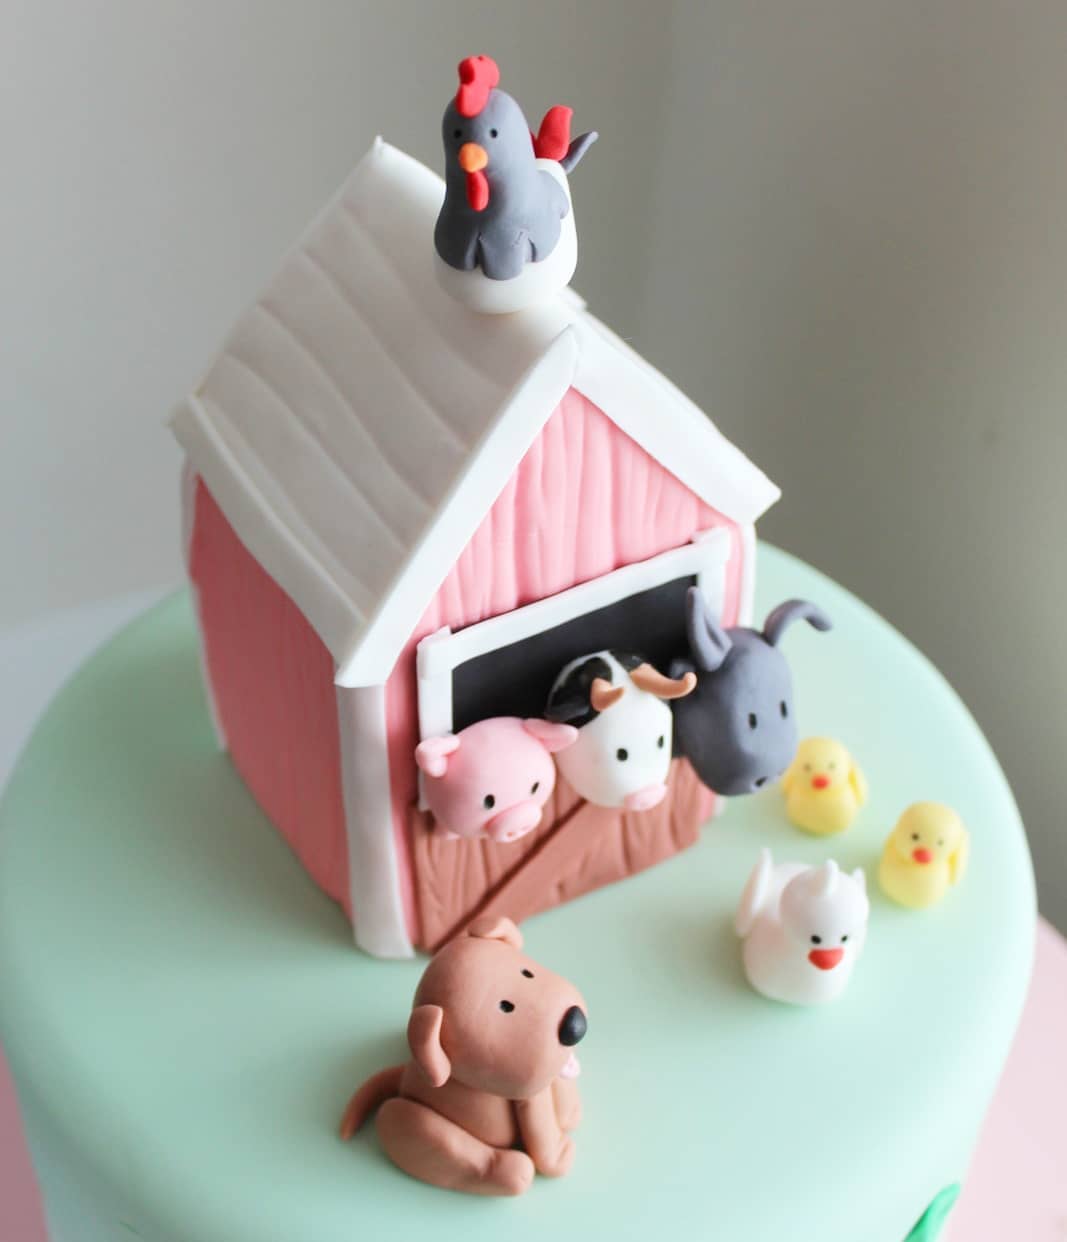 Farmhouse Cake